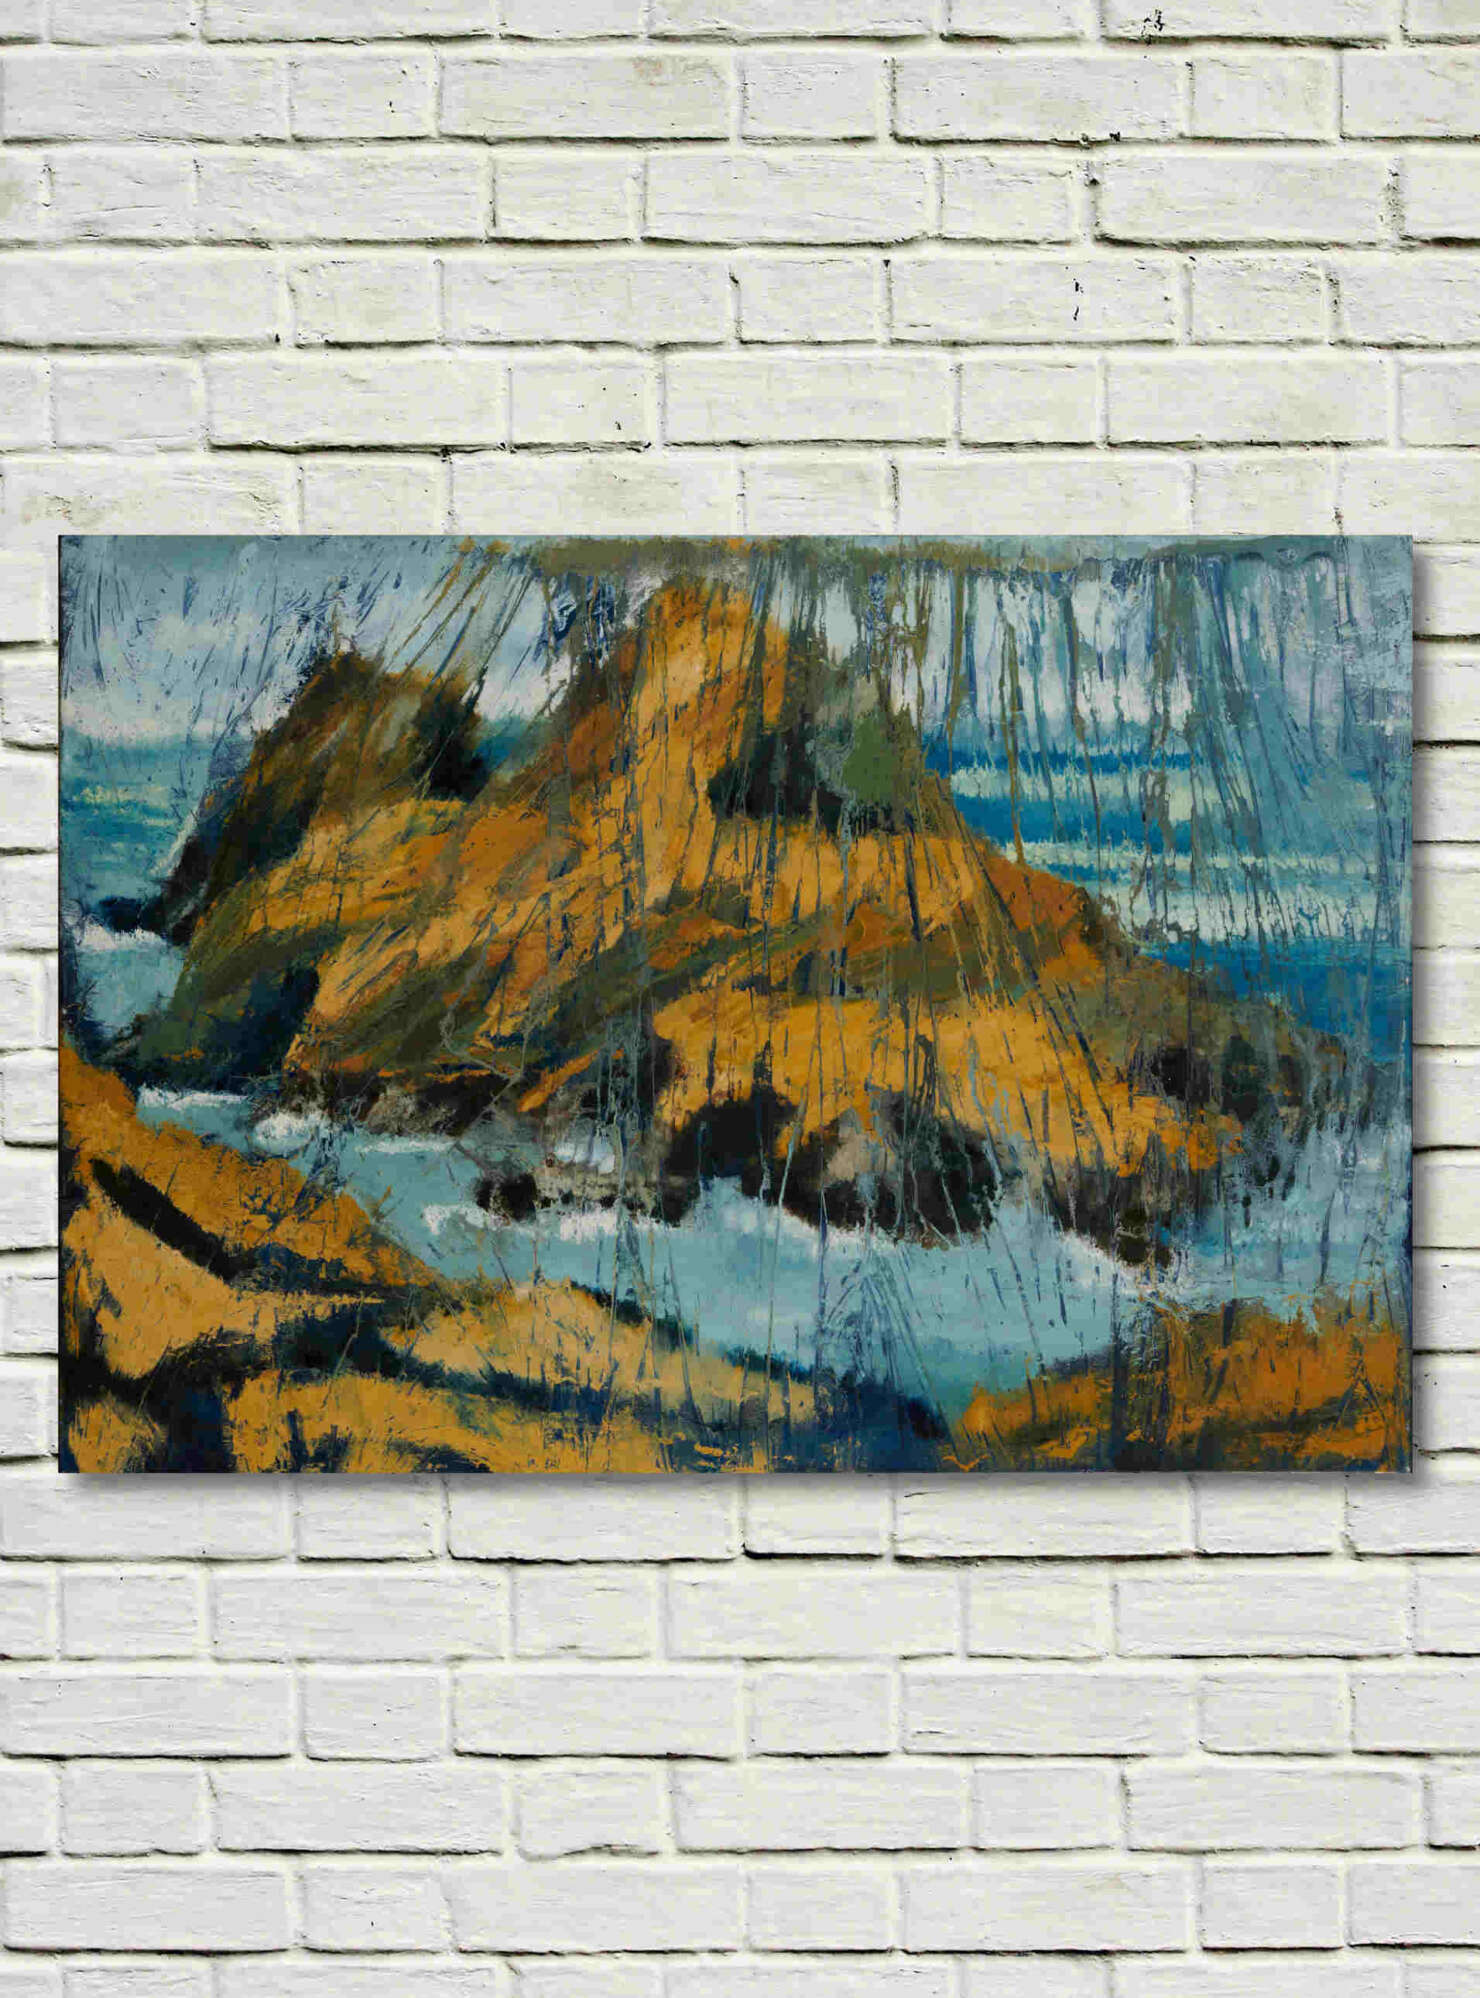 artist rod coyne's landscape "Approach Flight Puffin Island" is shown here, unframed on a white wall.